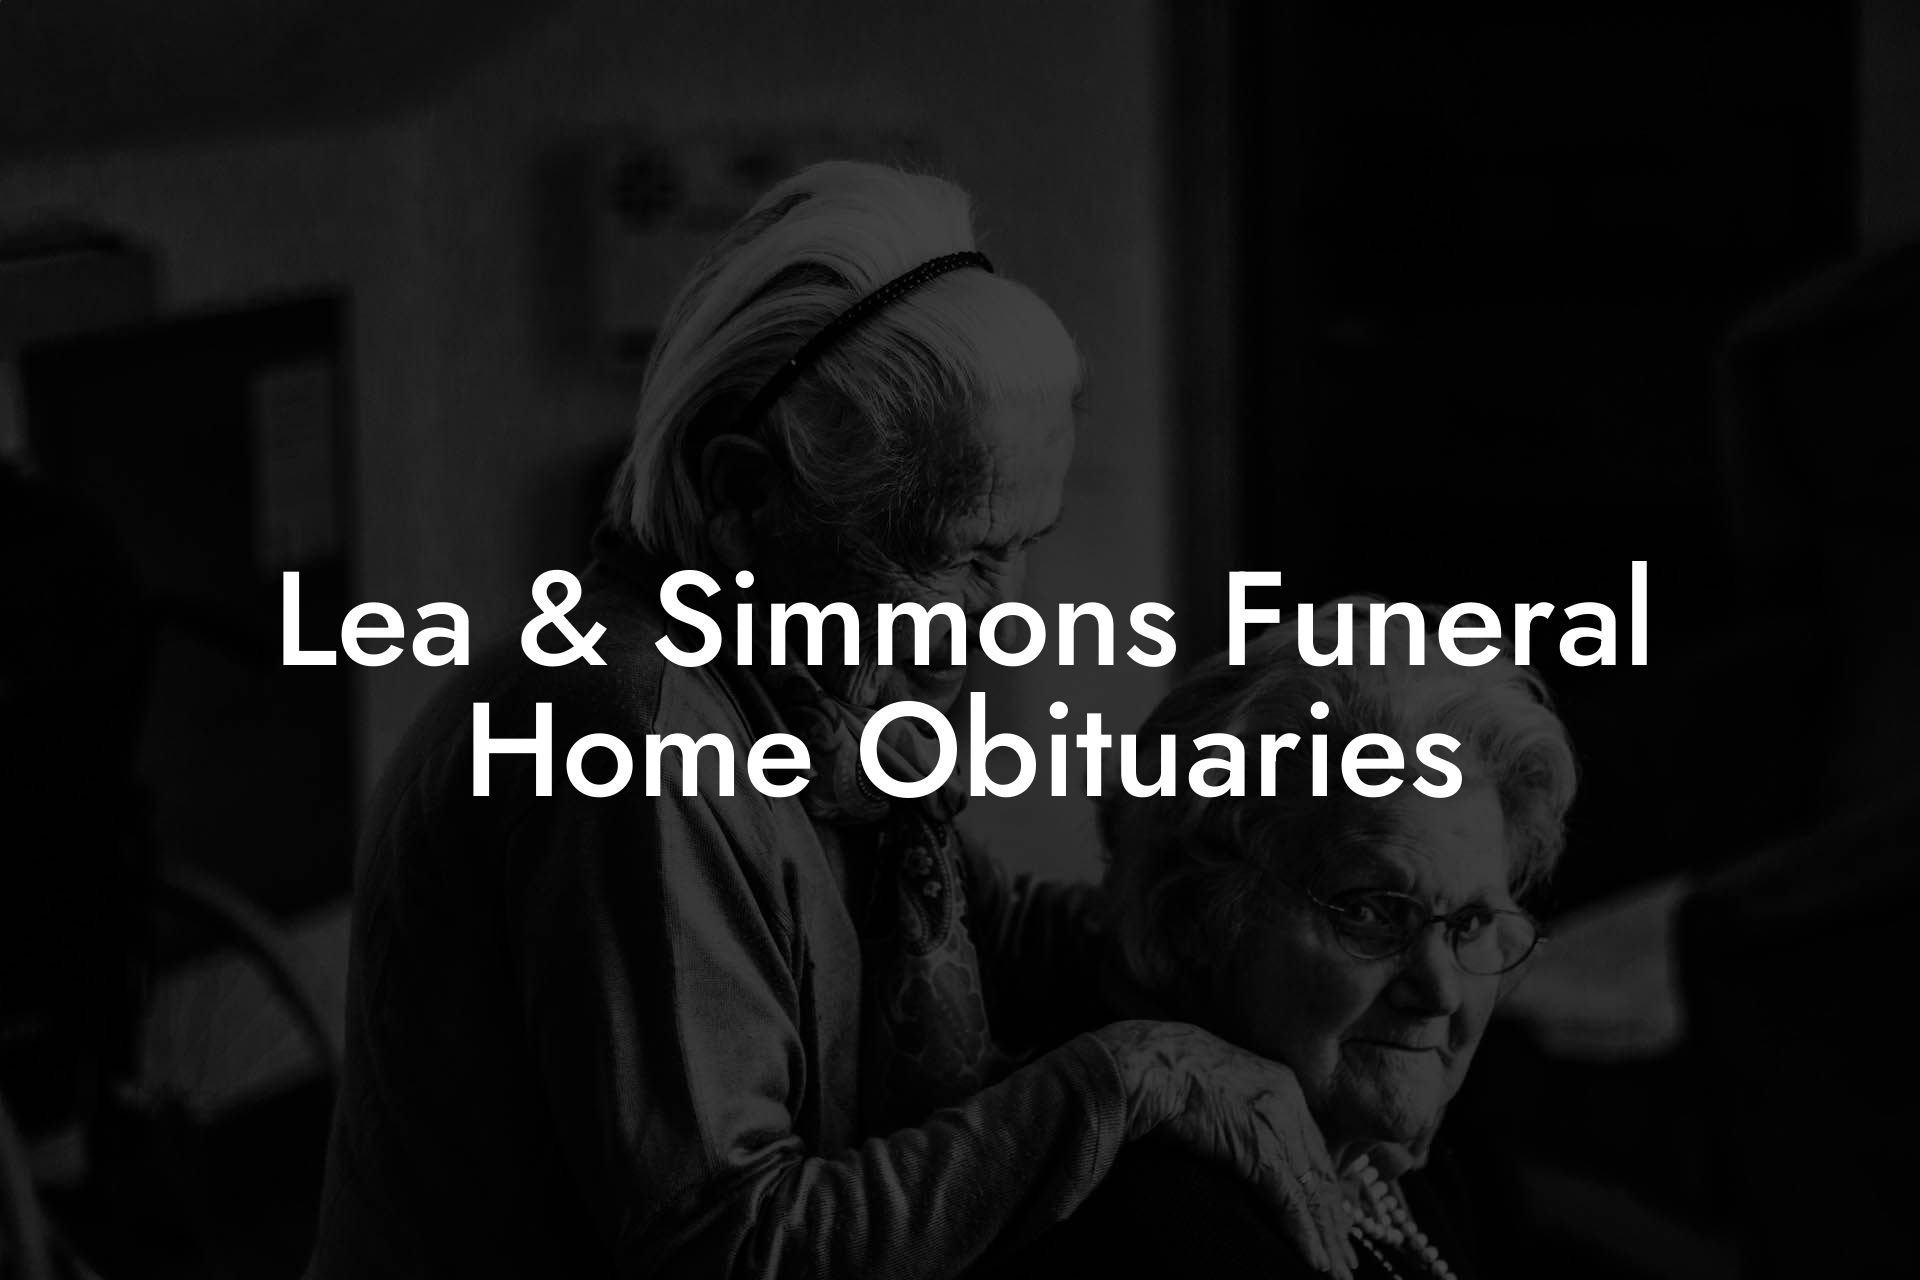 Lea & Simmons Funeral Home Obituaries